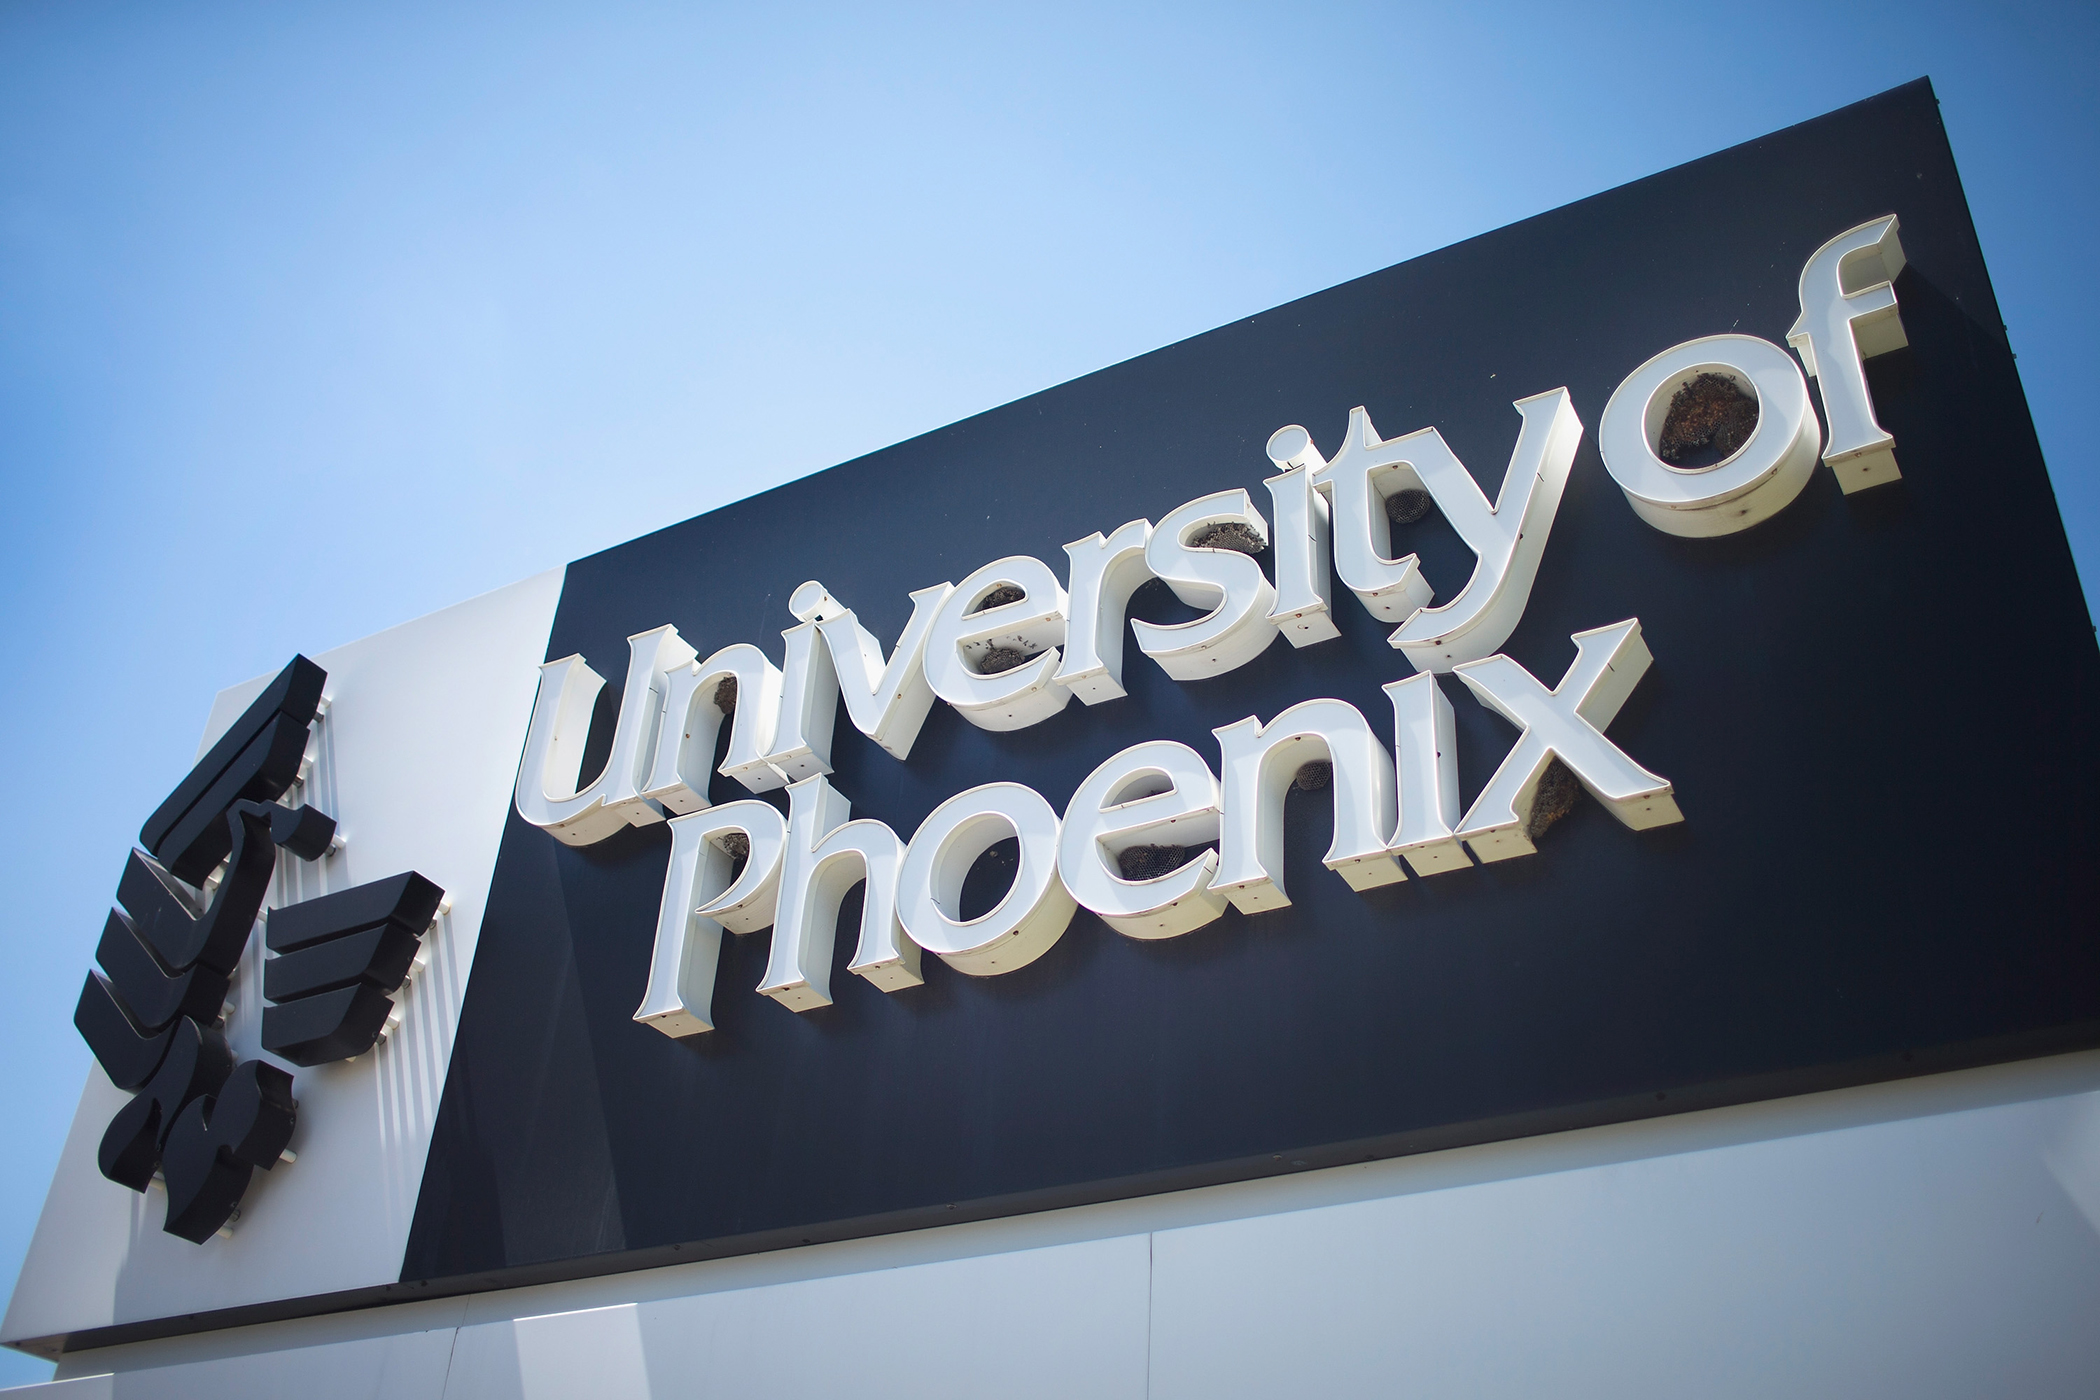 university of phoenix student portal